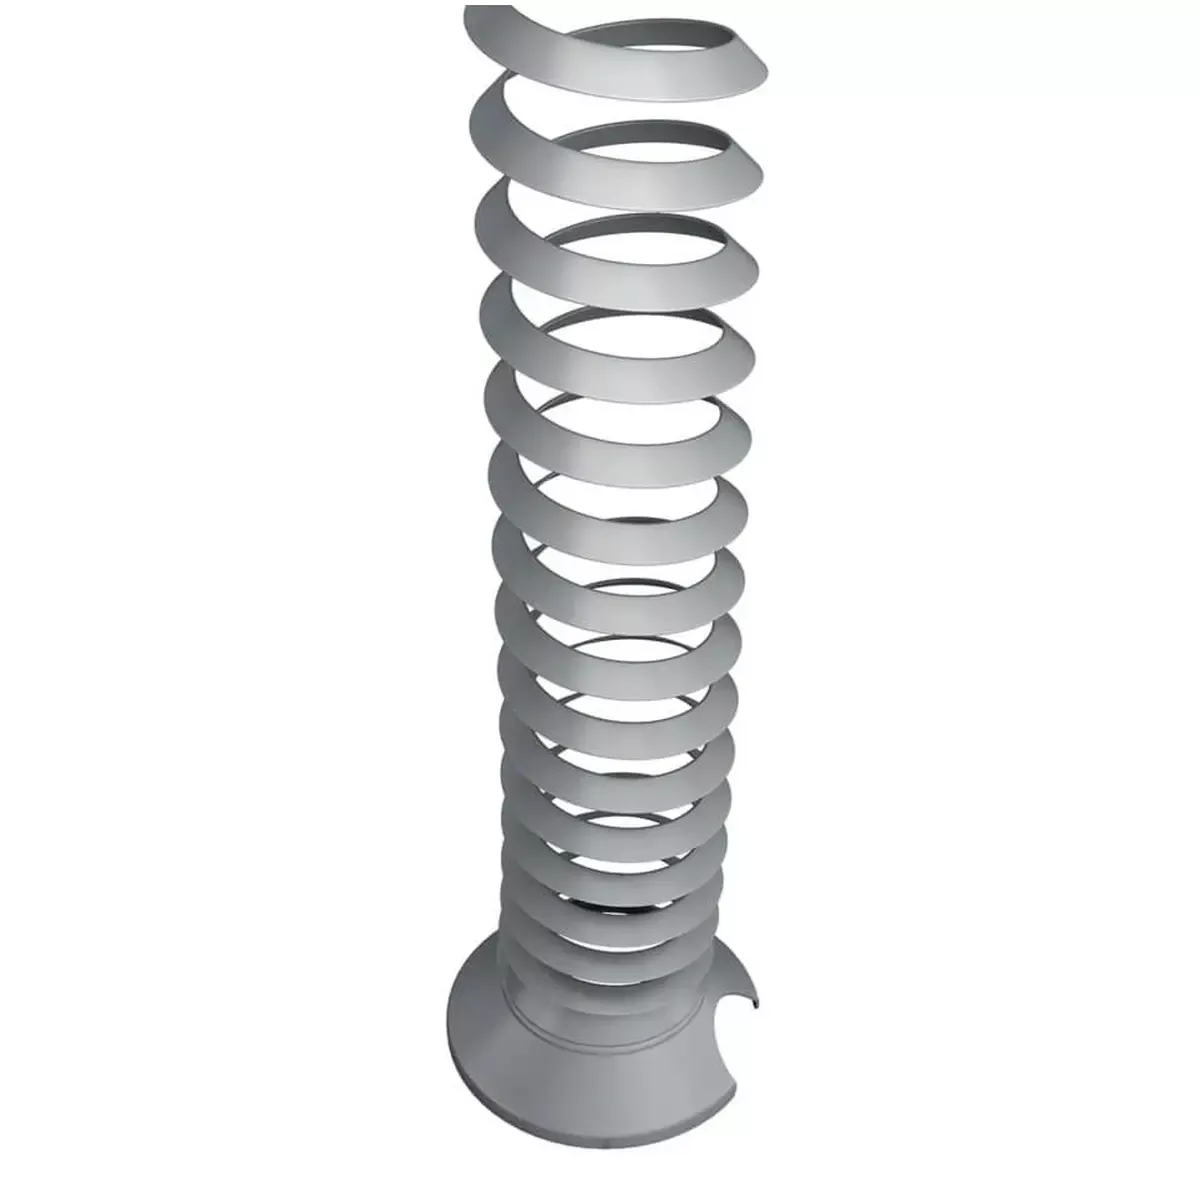 Büromaterial Kabelspirale - 70 - 130 cm, vertikal, flexibel für Bürobedarf